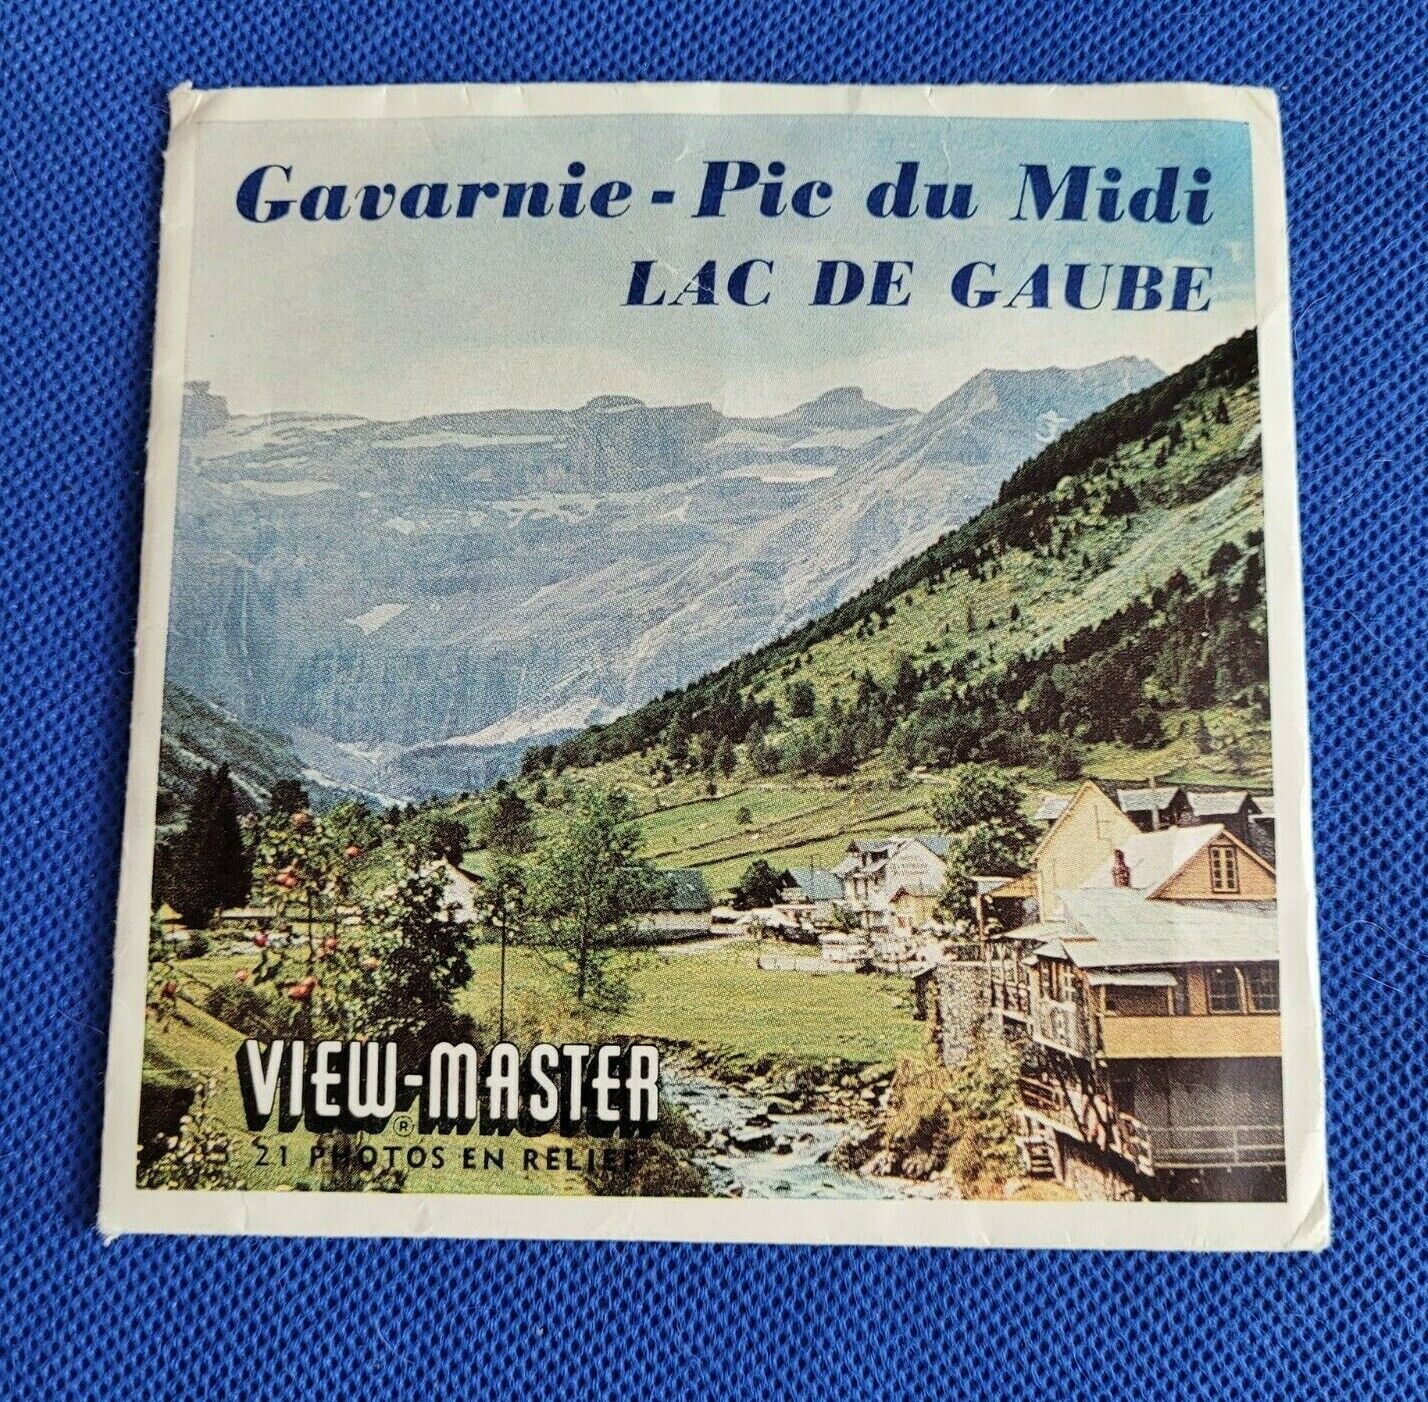 C188 F Gavarnie Pic du Midi Lac De Gaube France French view-master Reels Packet